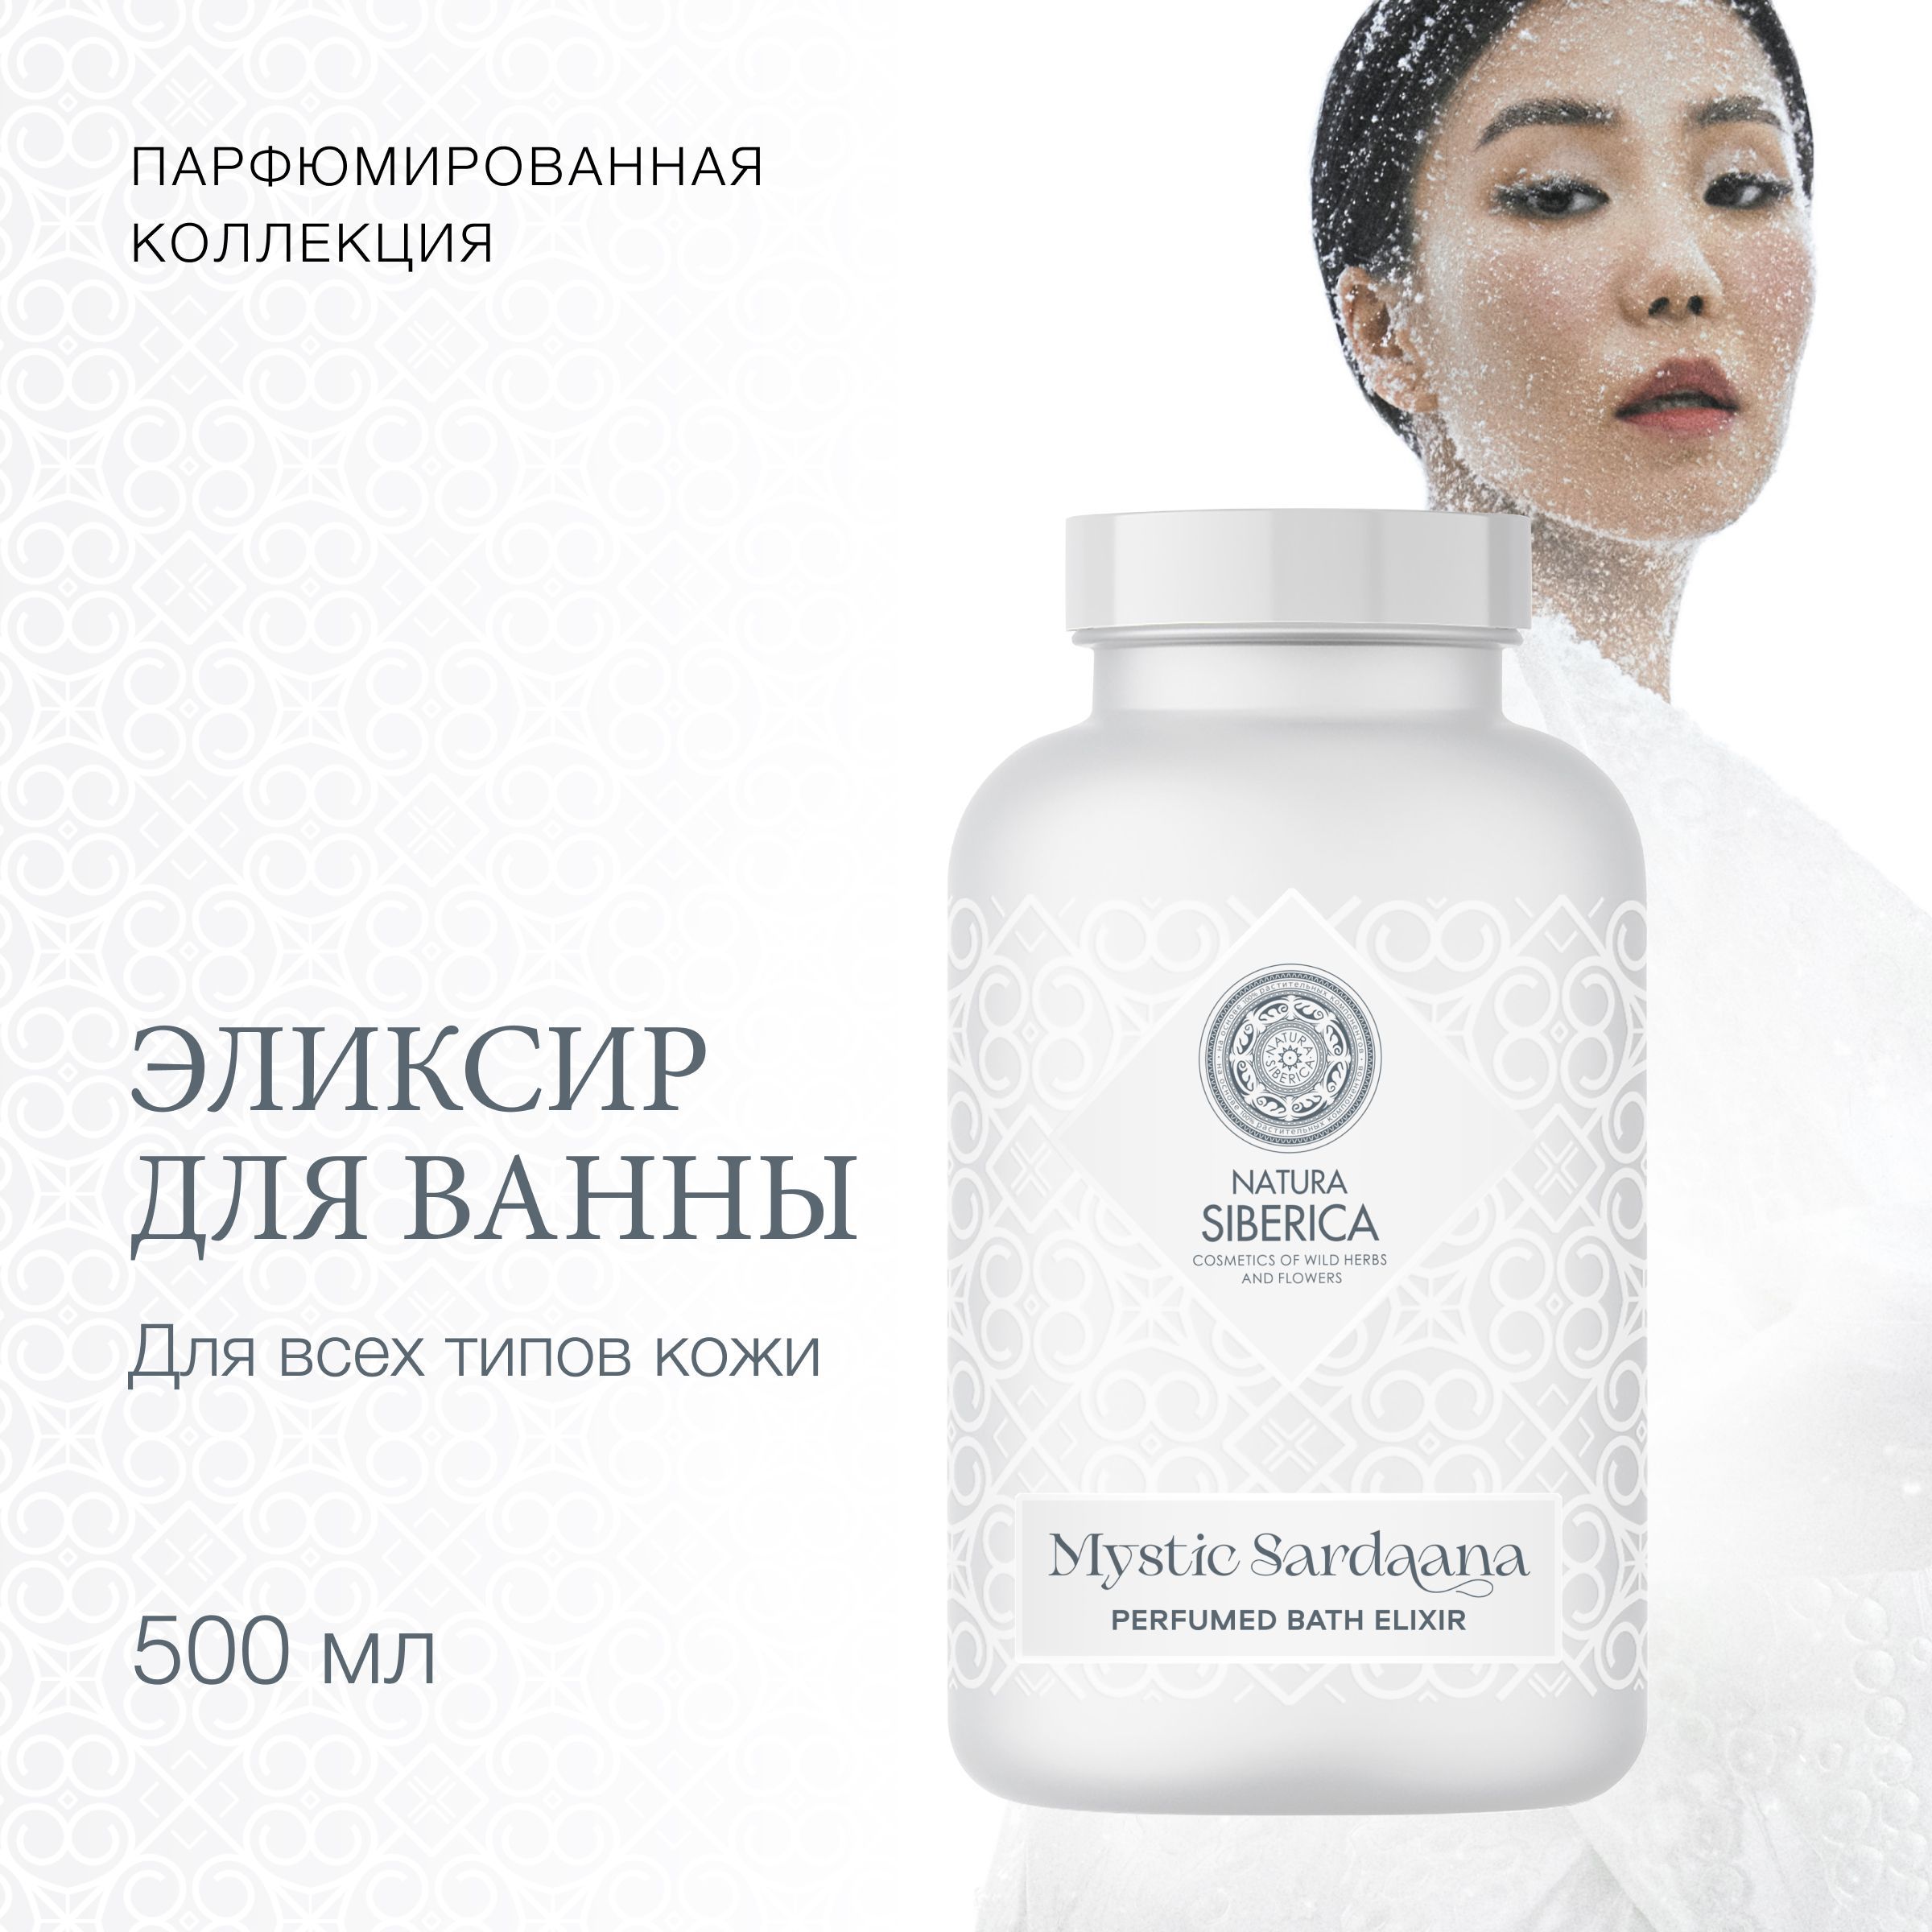 Натура Сиберика Мистик Сардаана жидкое мыло. Siberica молочко эликсир для ванны. Подарочный набор натура Сиберика спа ритуал Flowers.